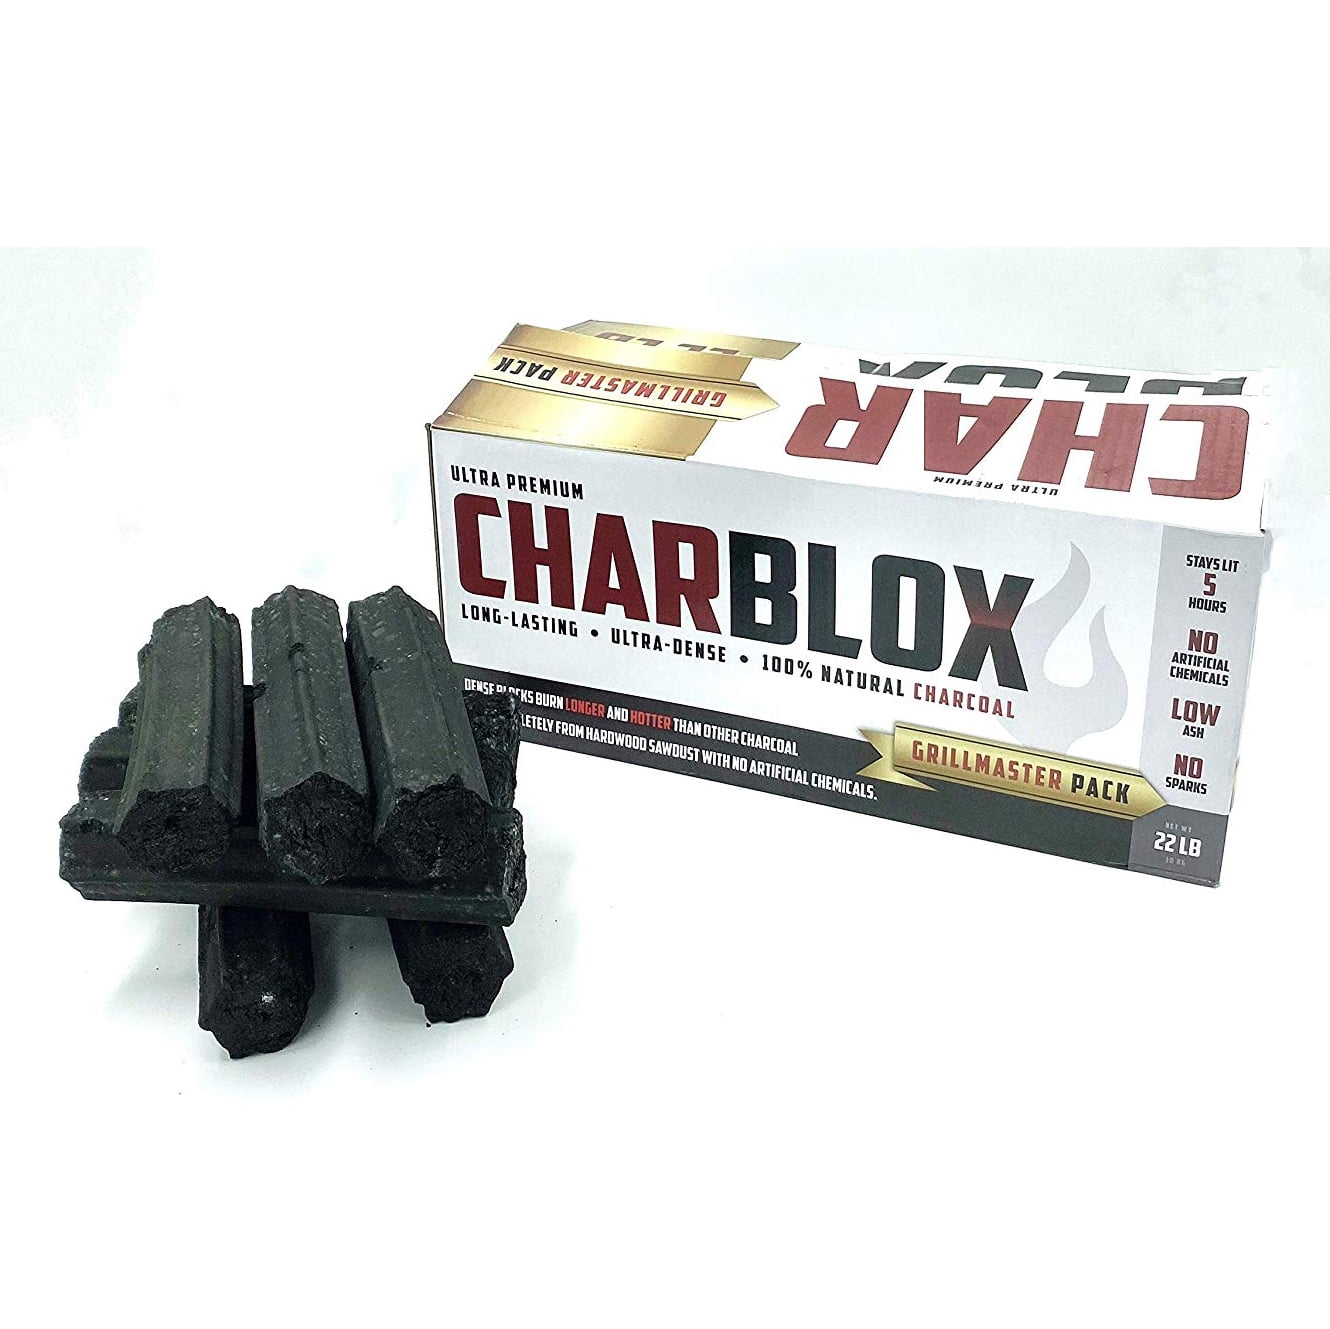 CHARBLOX TEC-0001 Lasting Premium Natural Wood Grilling Charcoal Logs 11 Lbs 